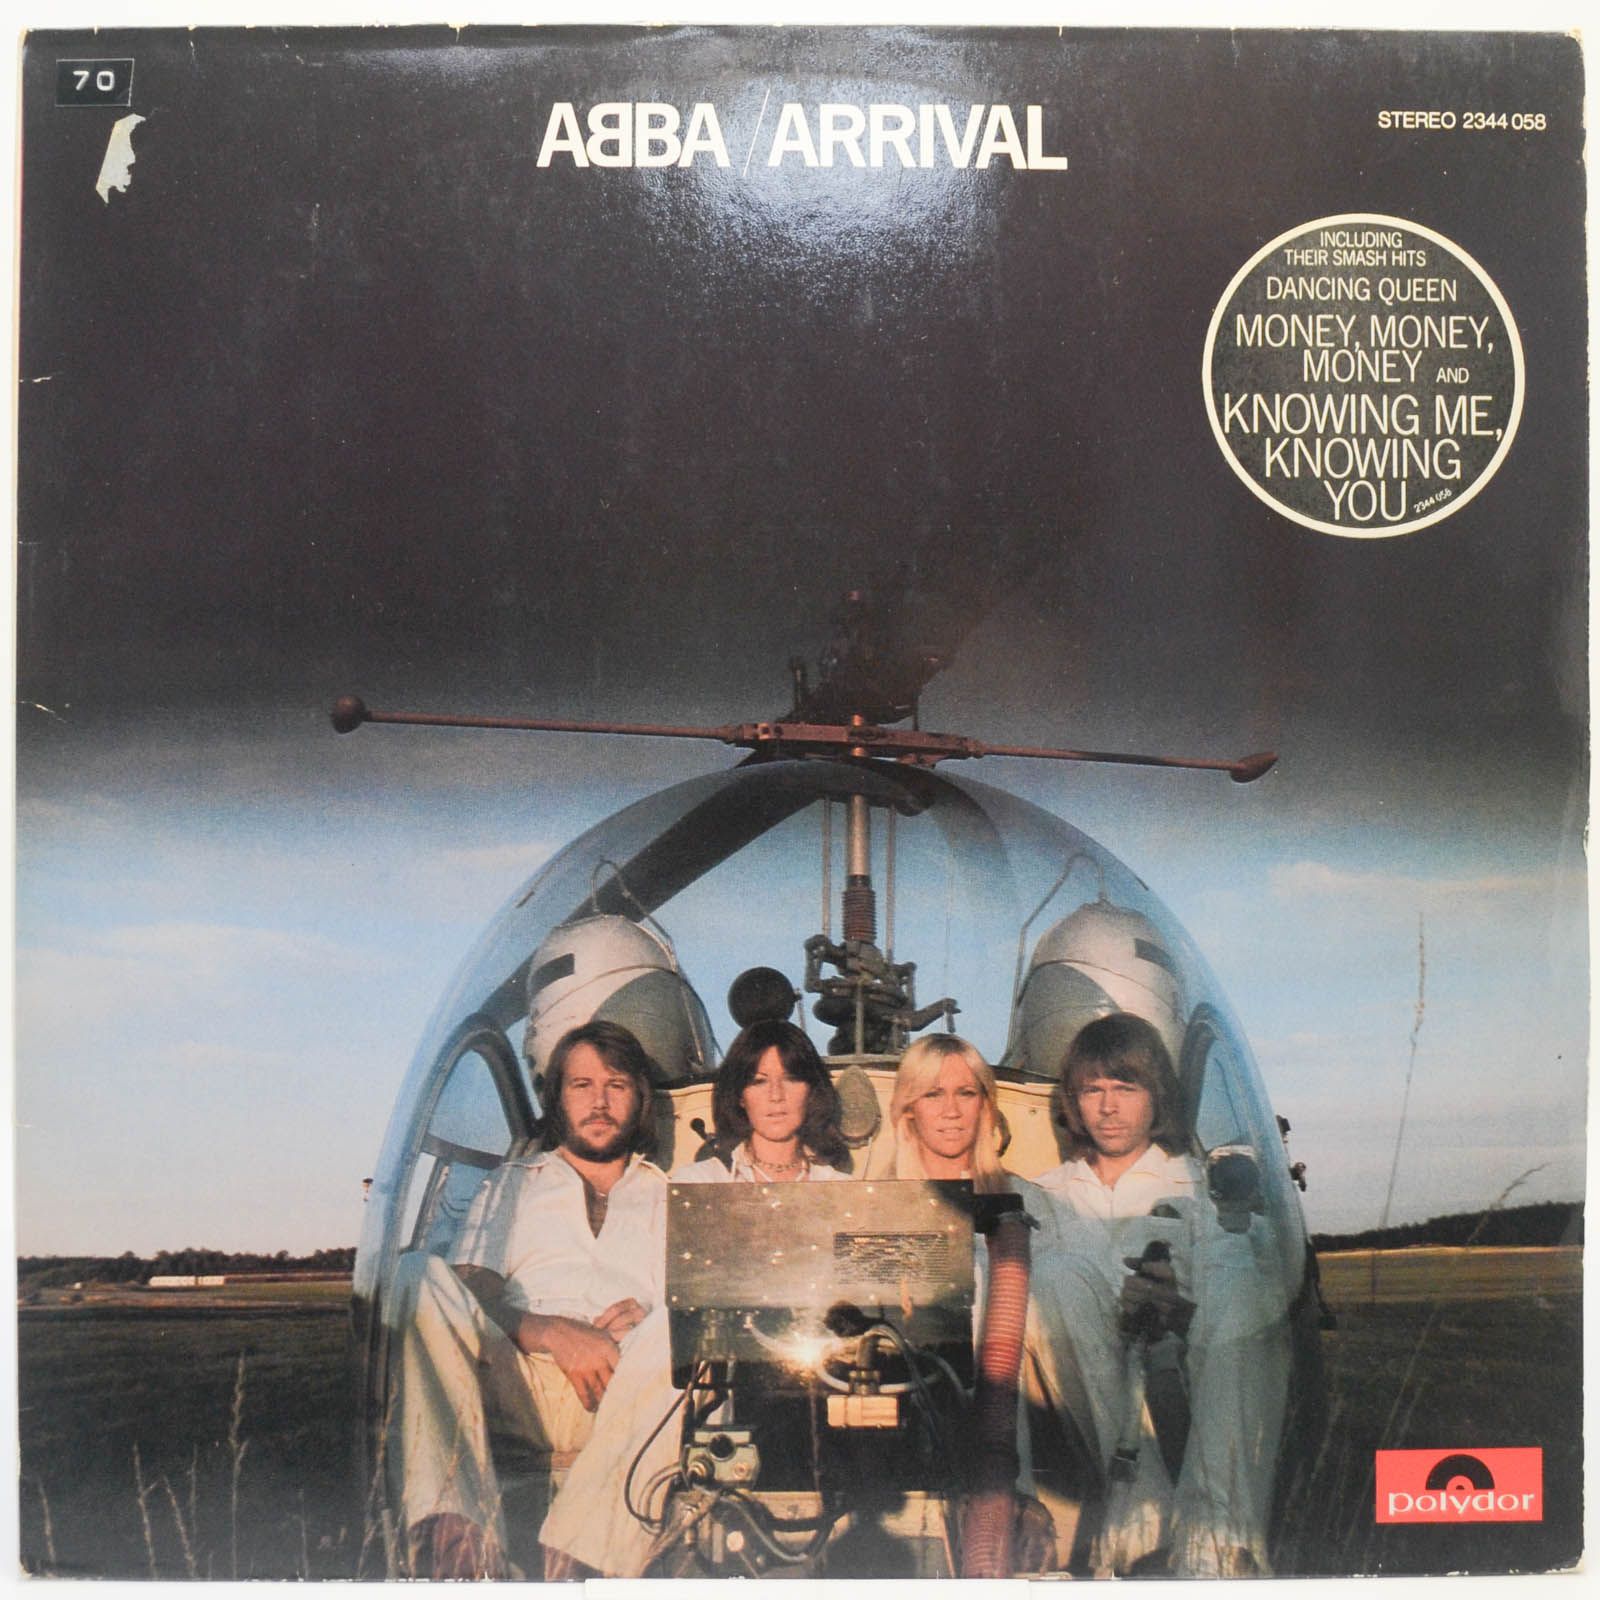 ABBA — Arrival, 1976